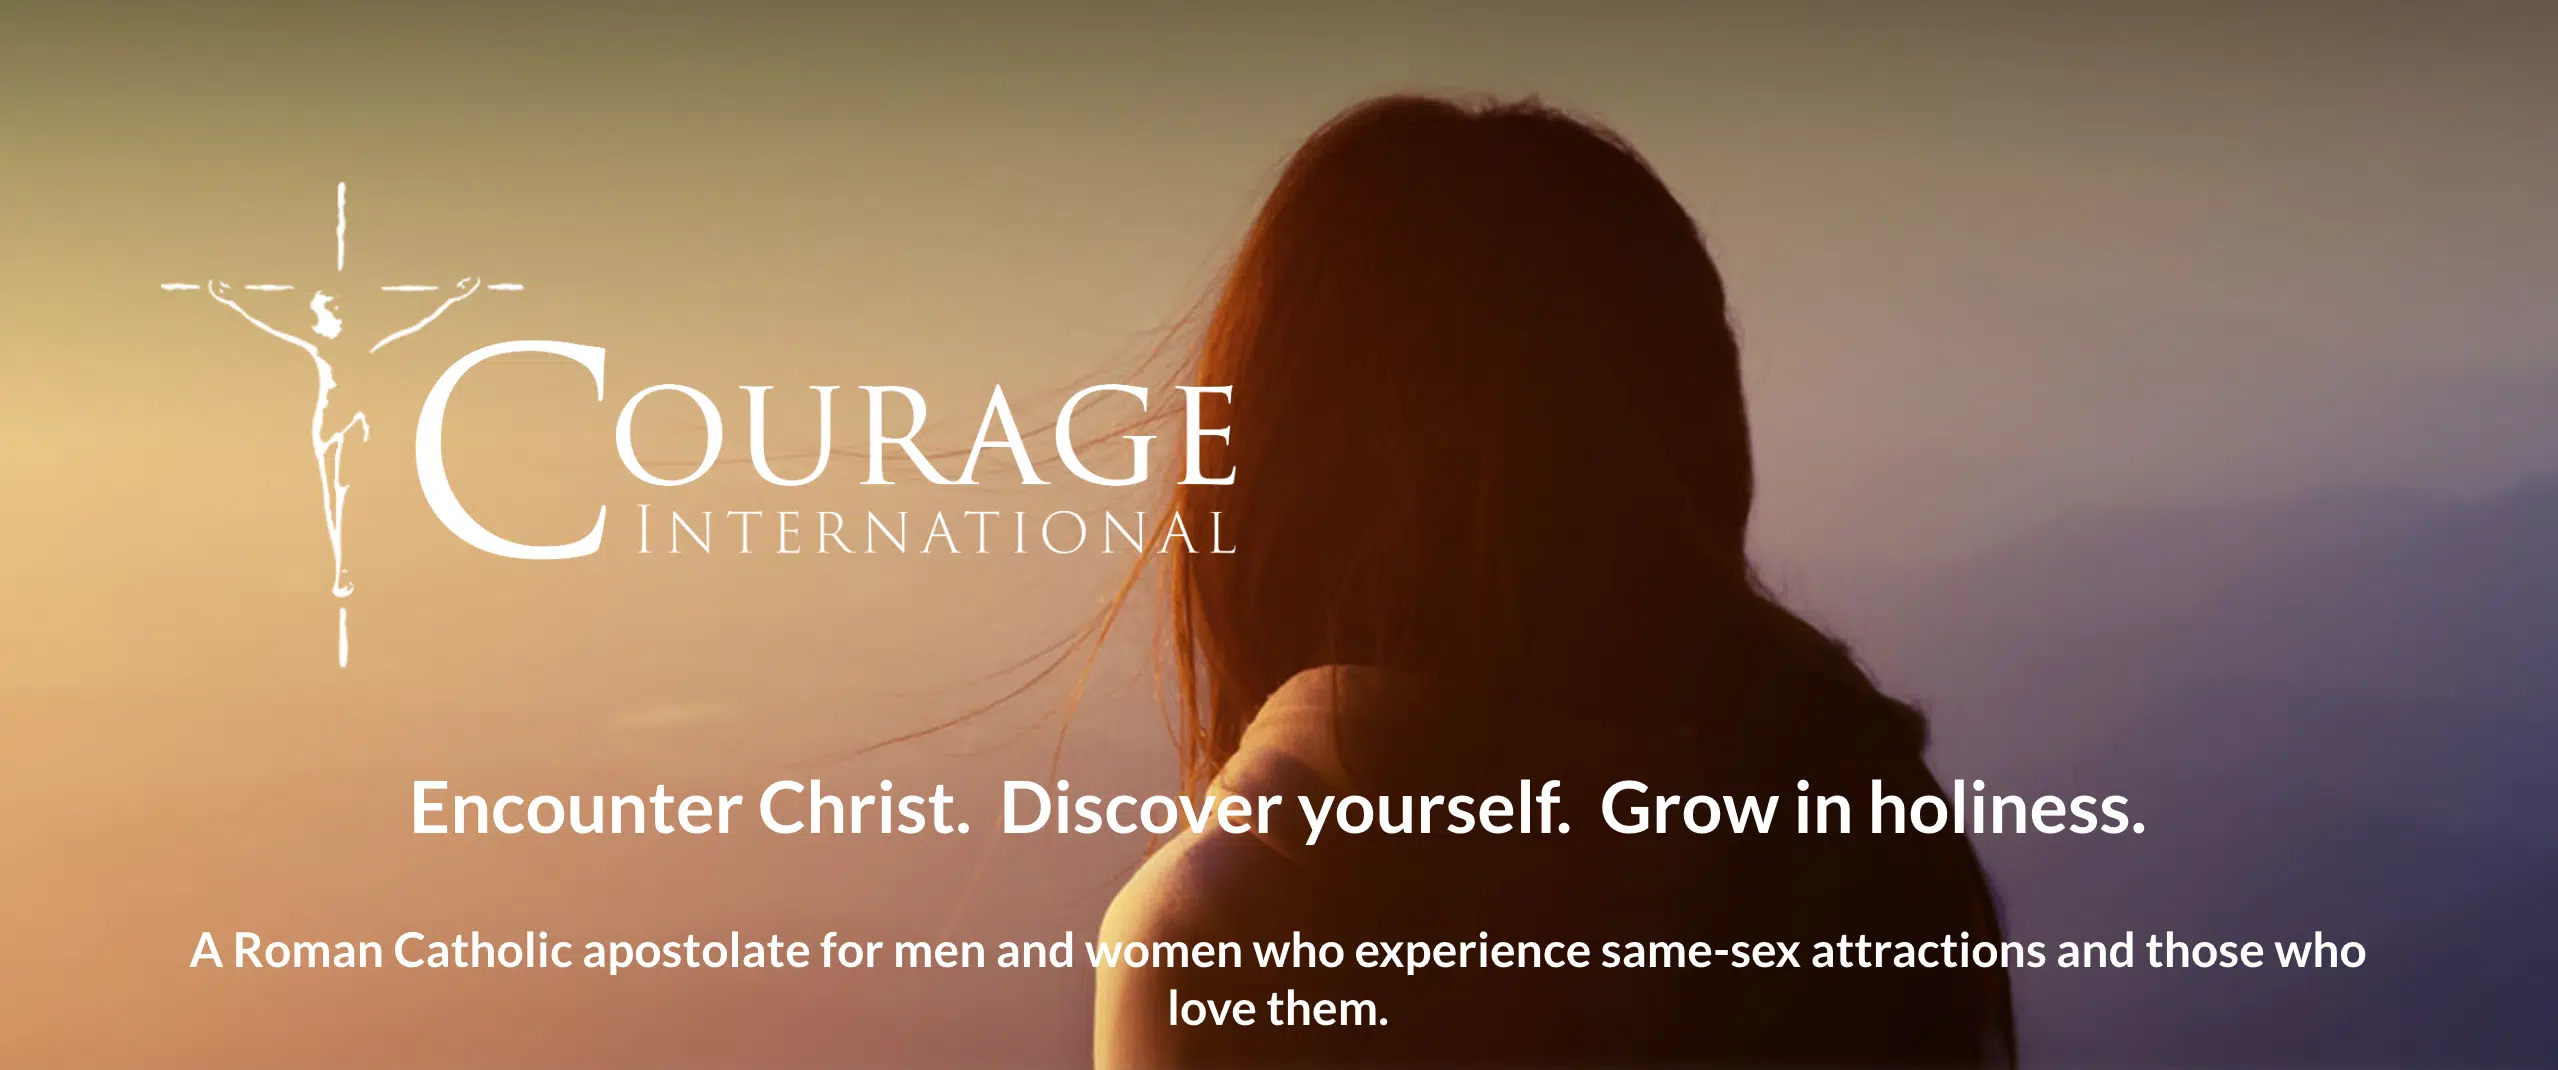 homepage of Courage International